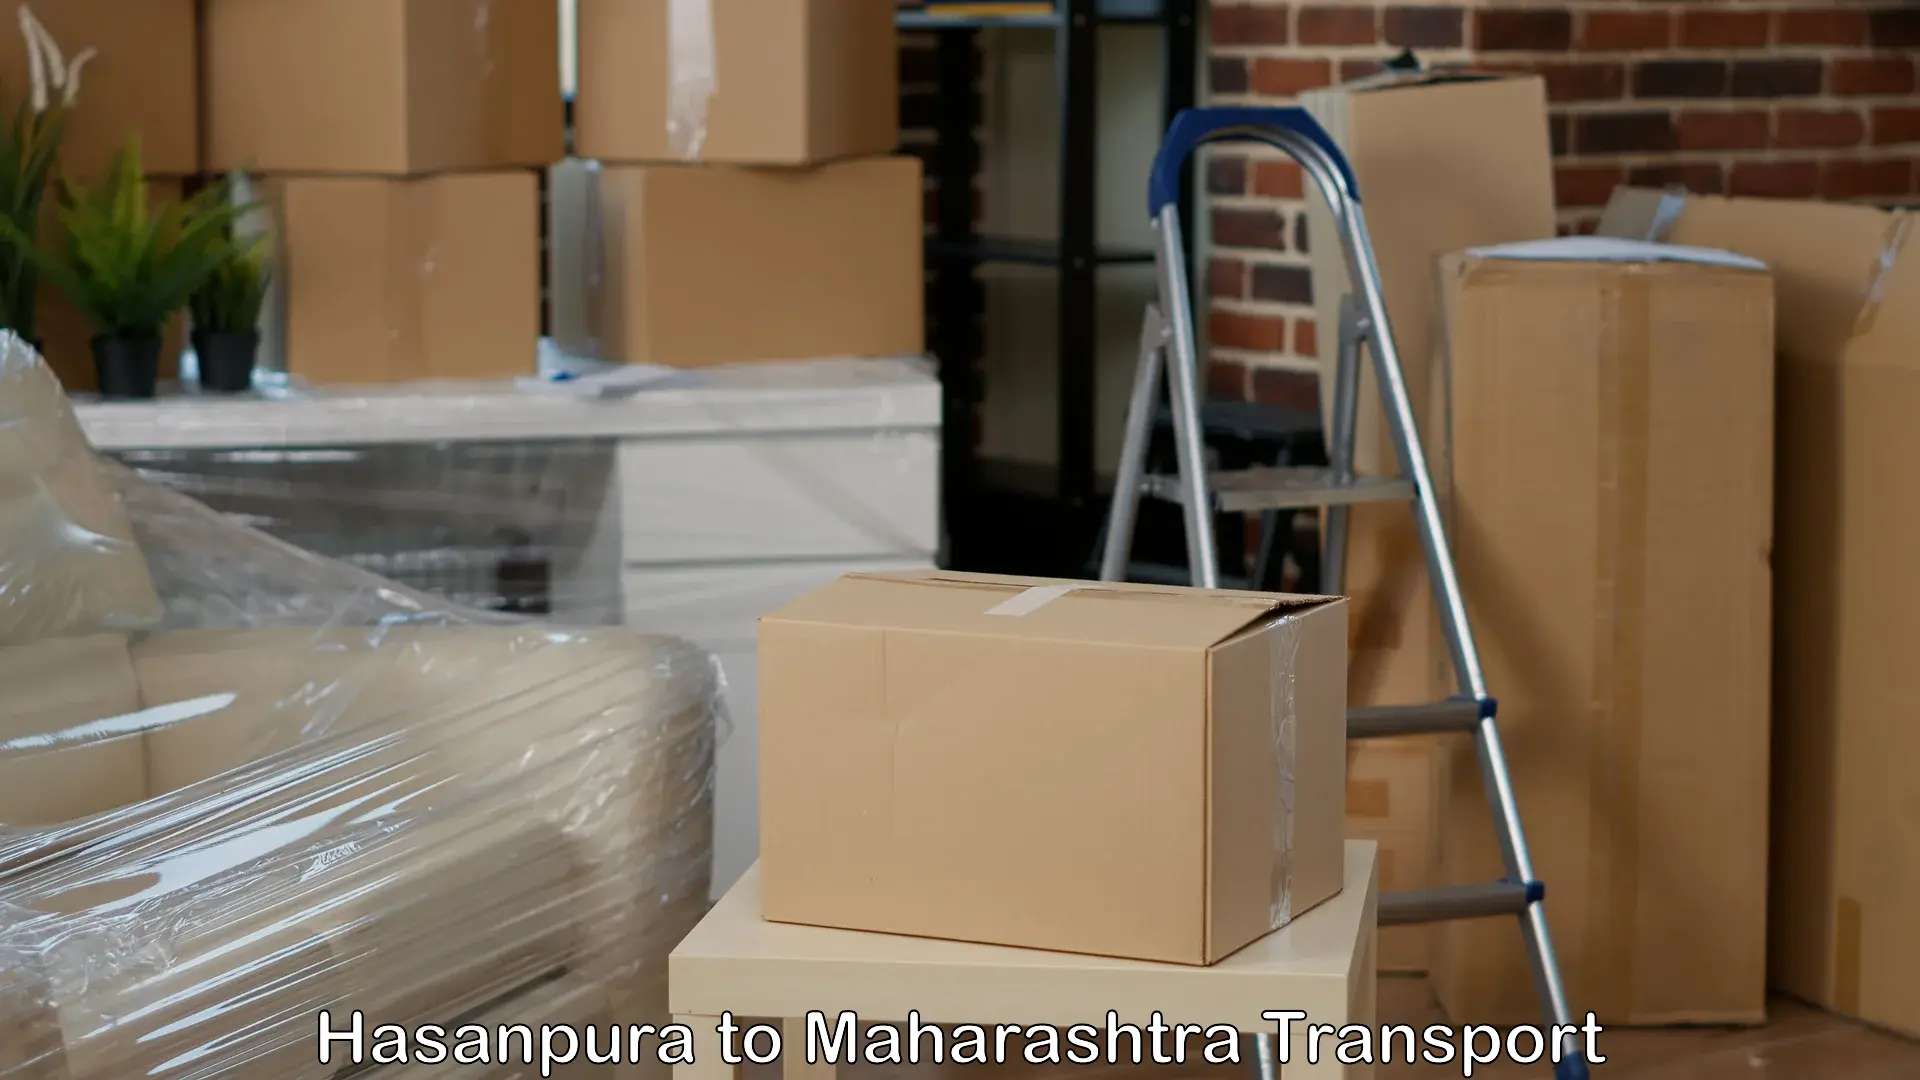 Shipping partner Hasanpura to Jasai